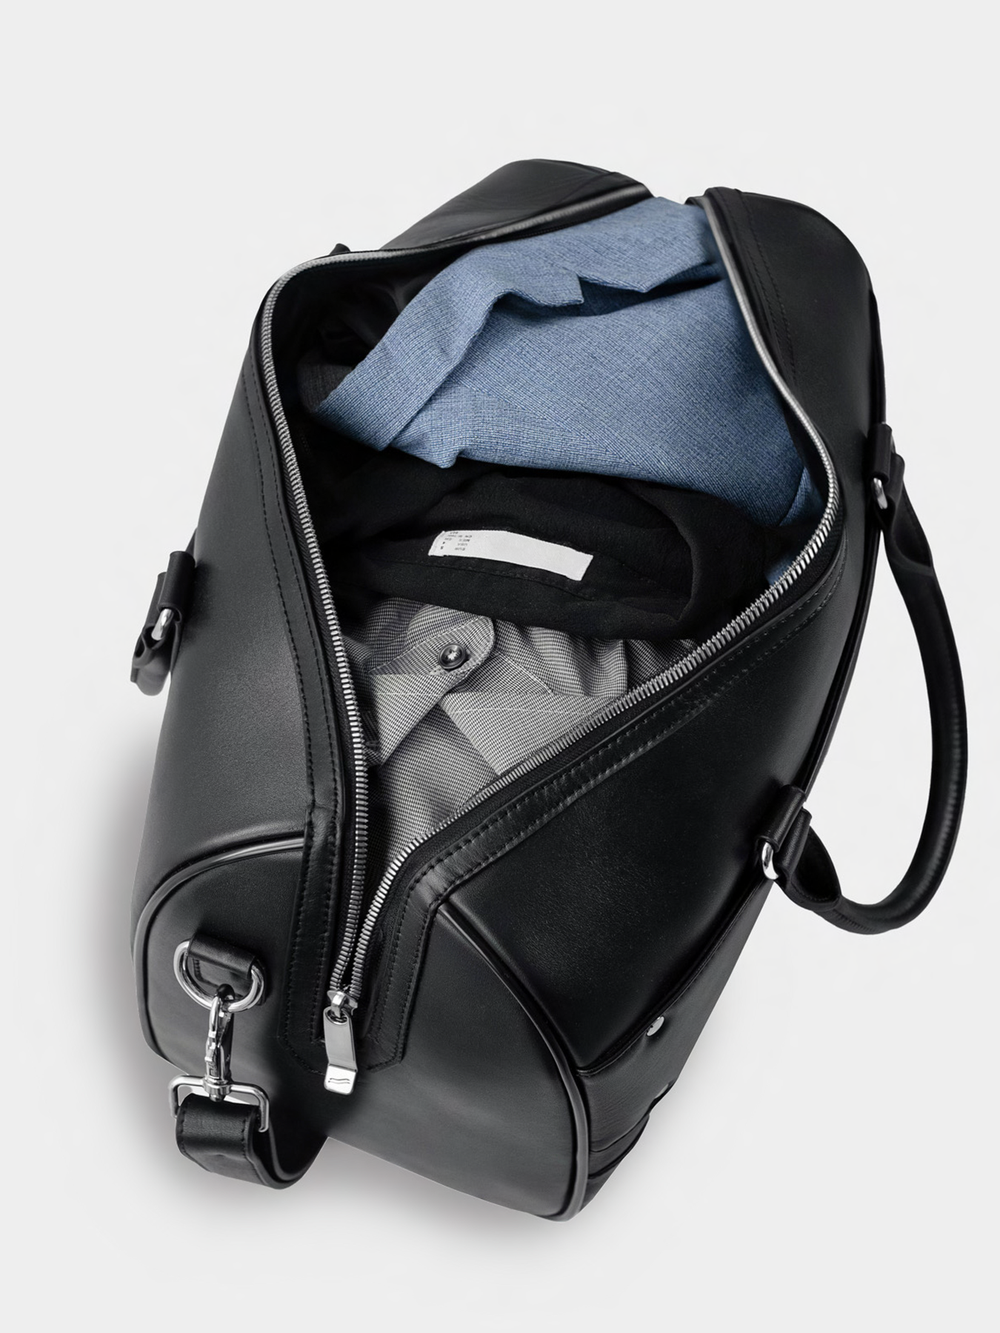 f36 duffel bag large black leather open